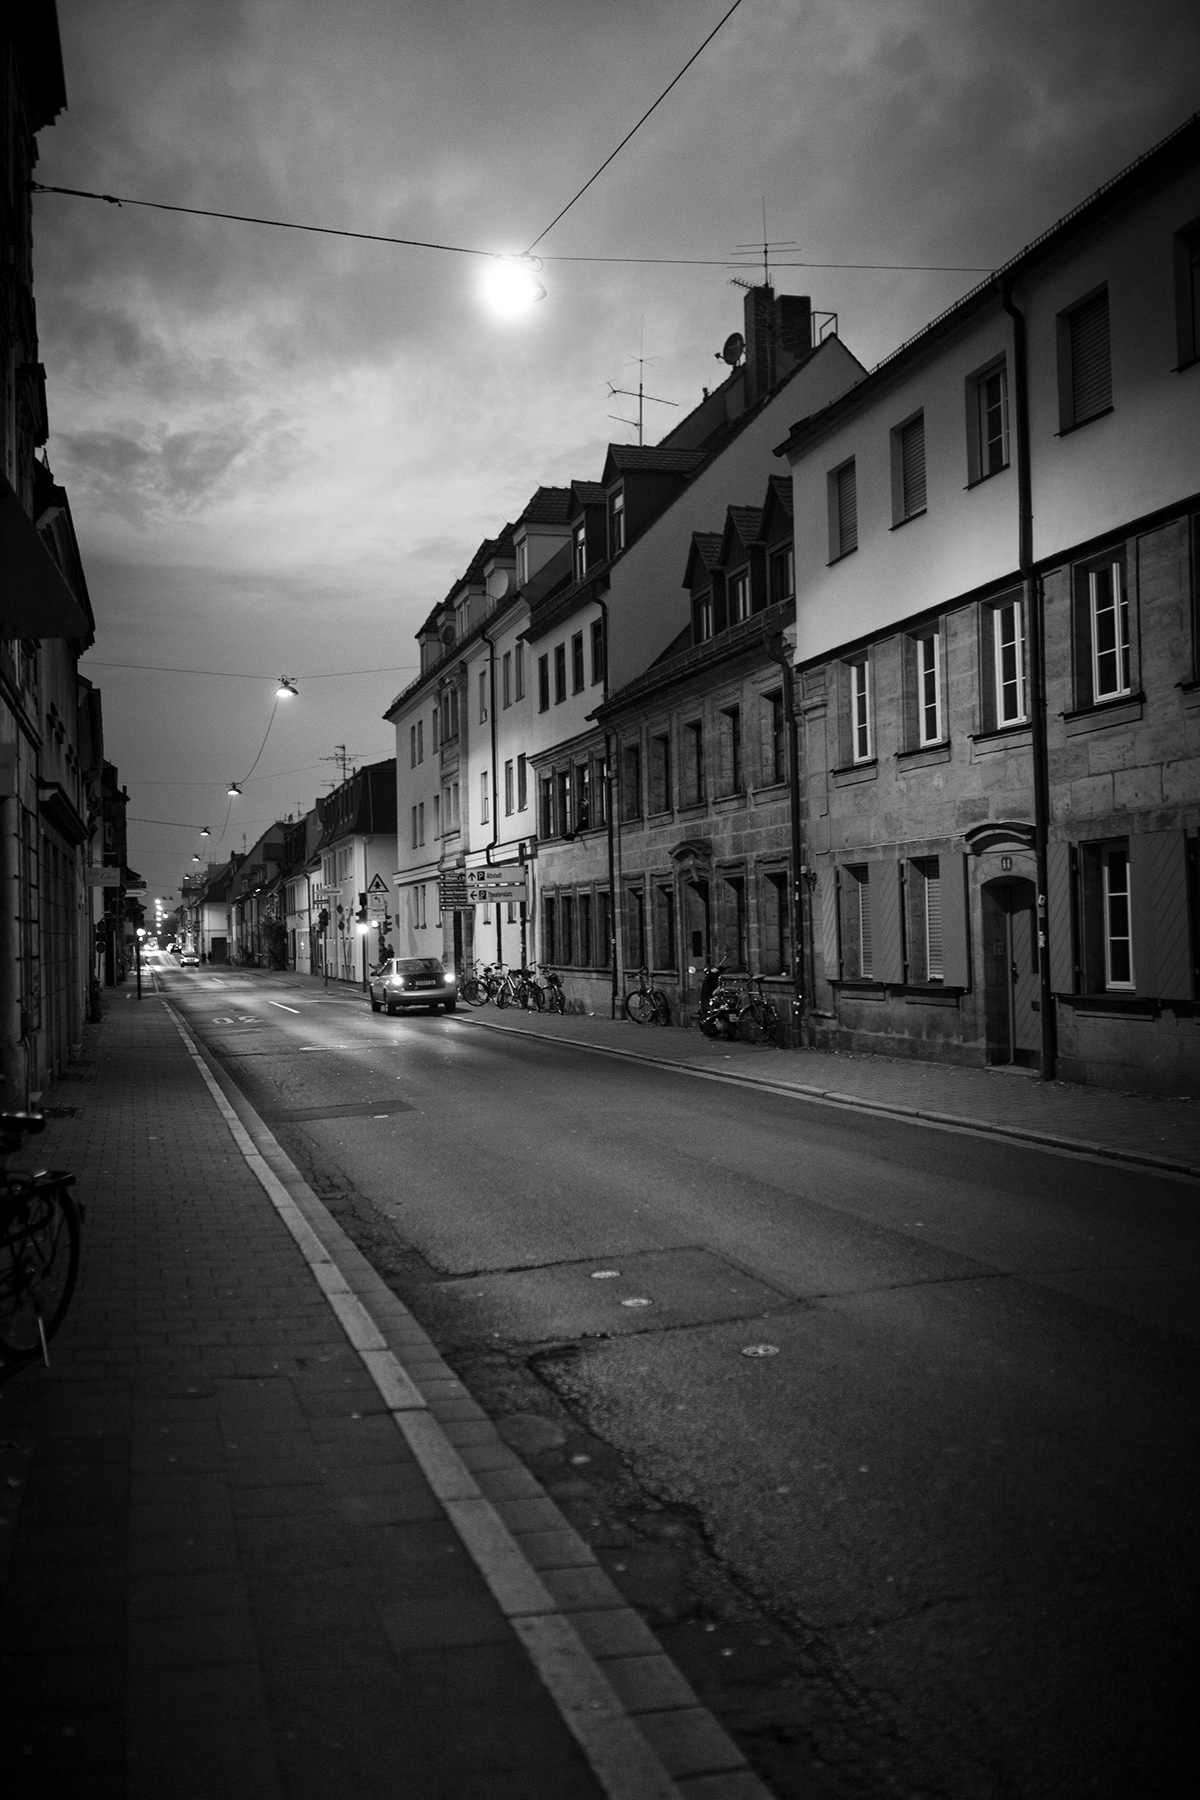 autumn black White sad melachonlic November blues erlangen germany city town streets empty